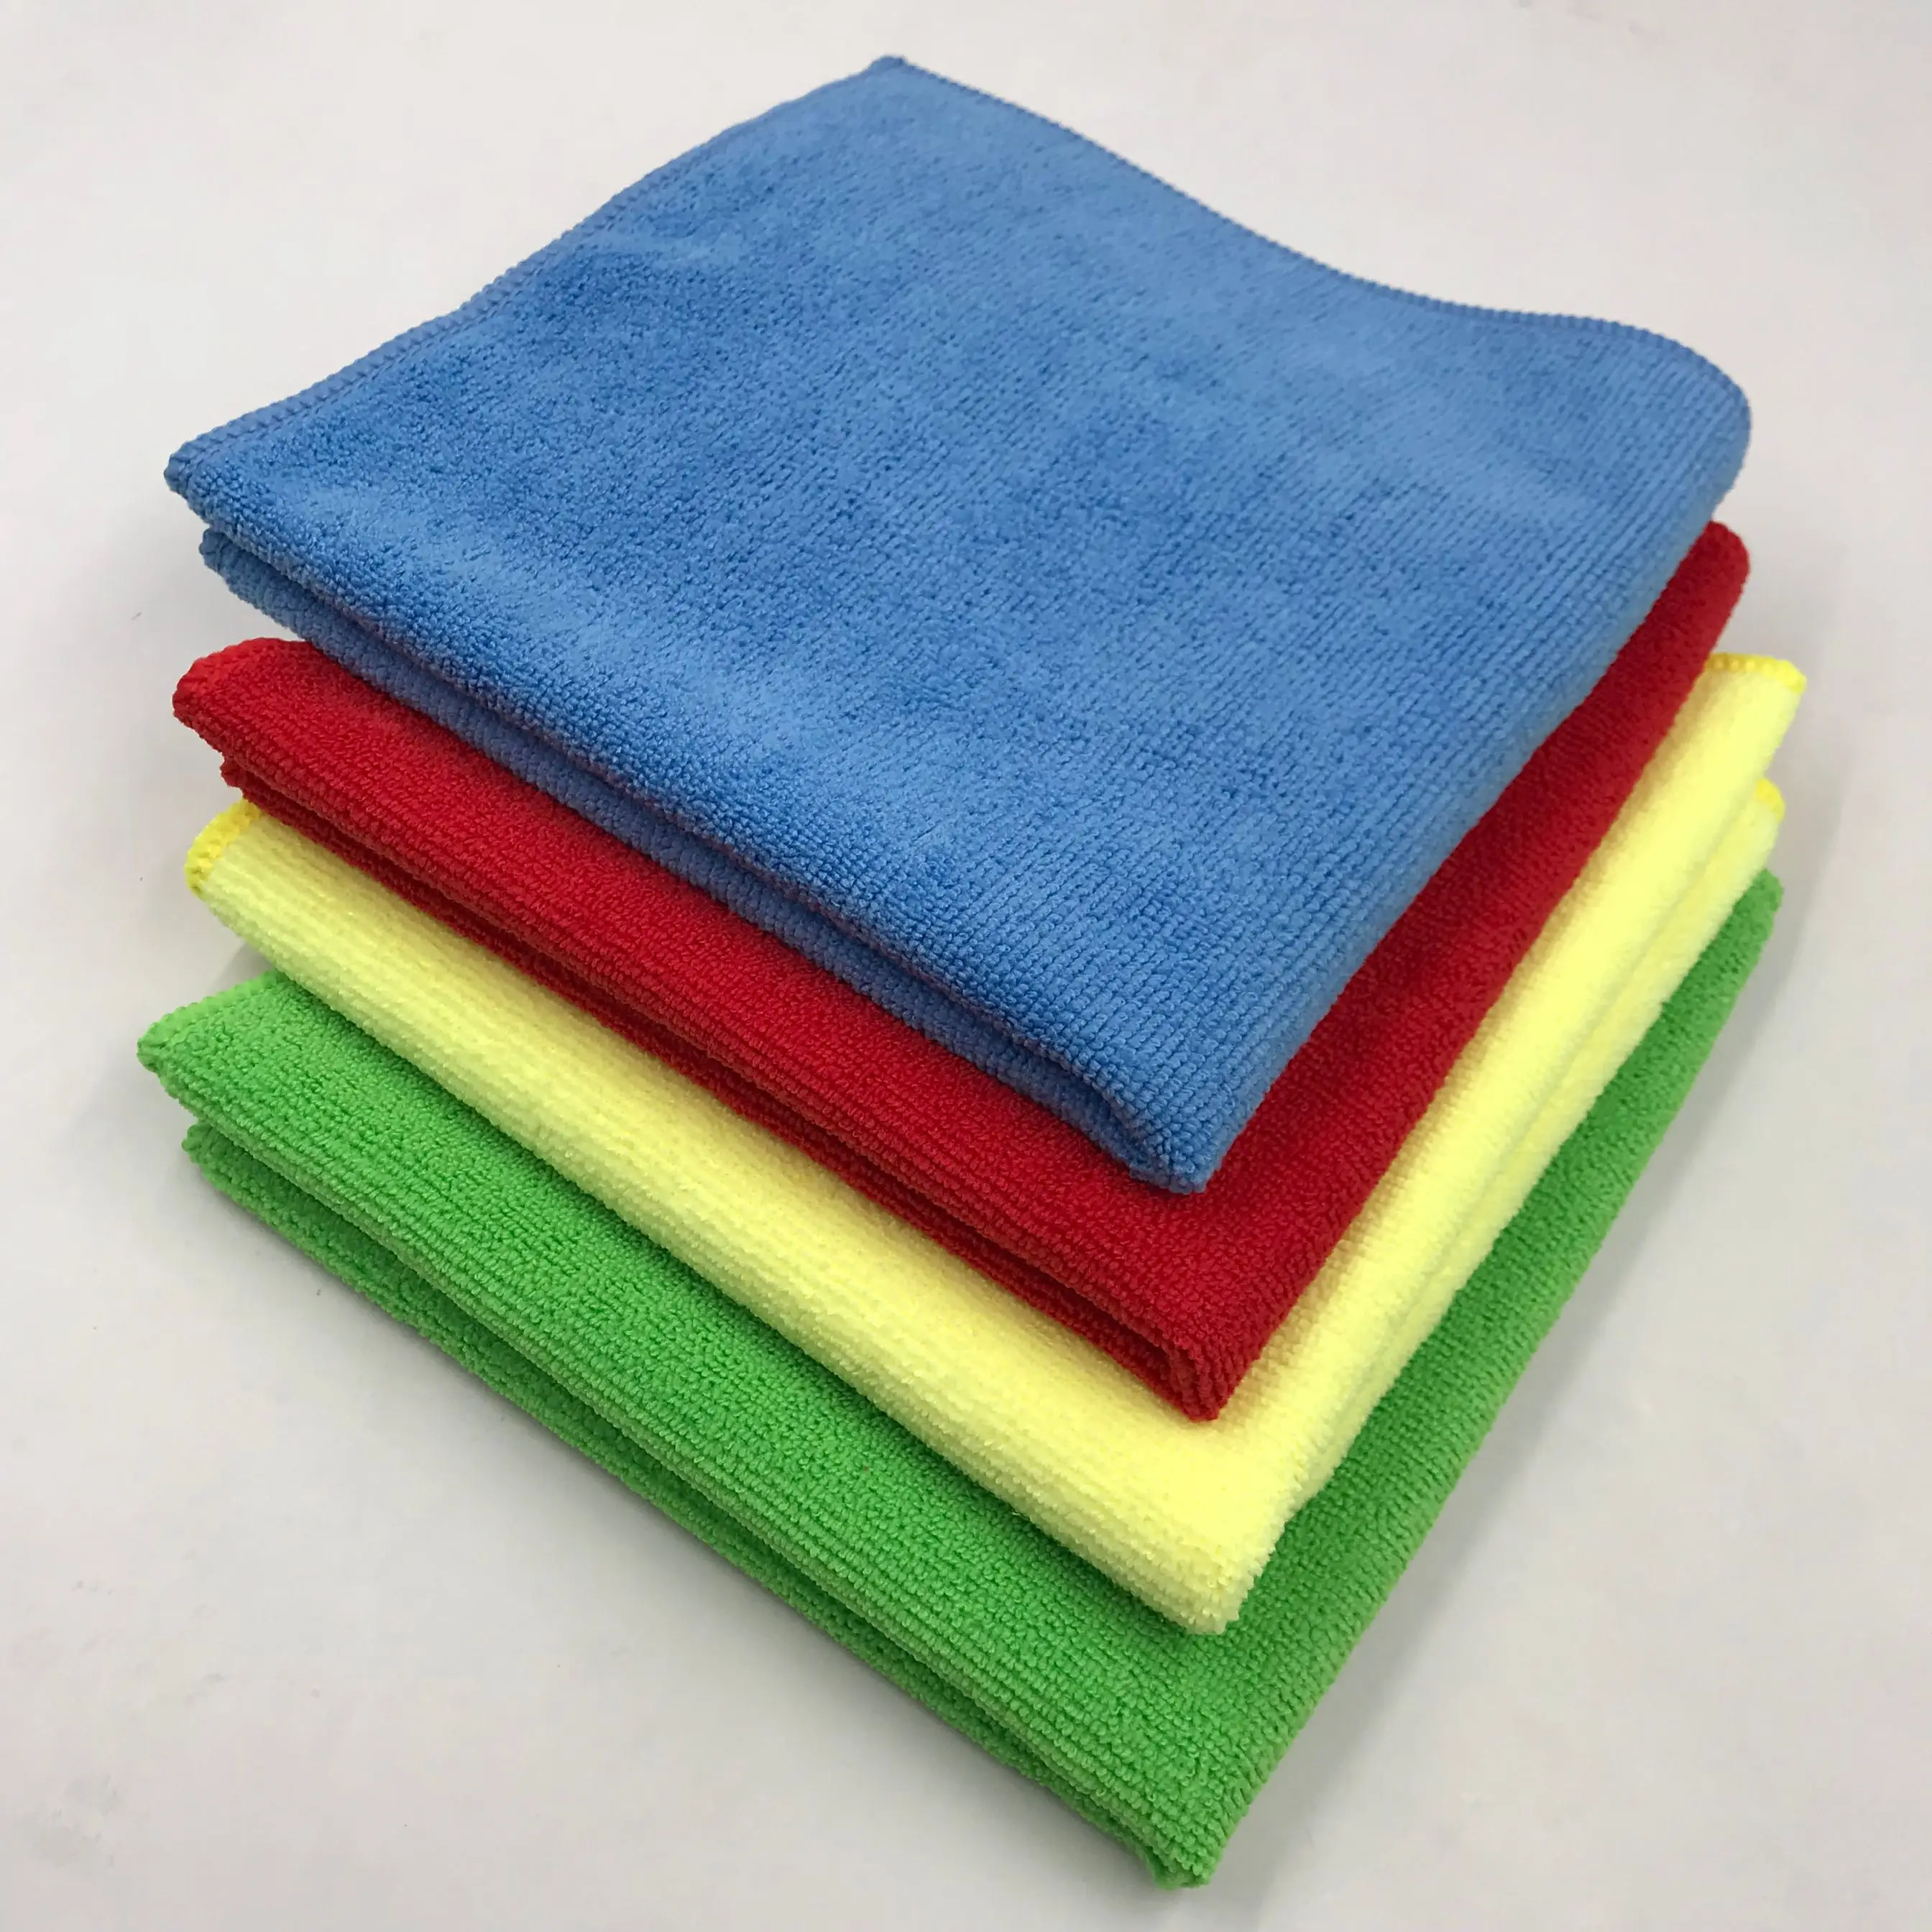 Softees Lint Free Microfiber Towels for Sale - Salon Towels 10ct